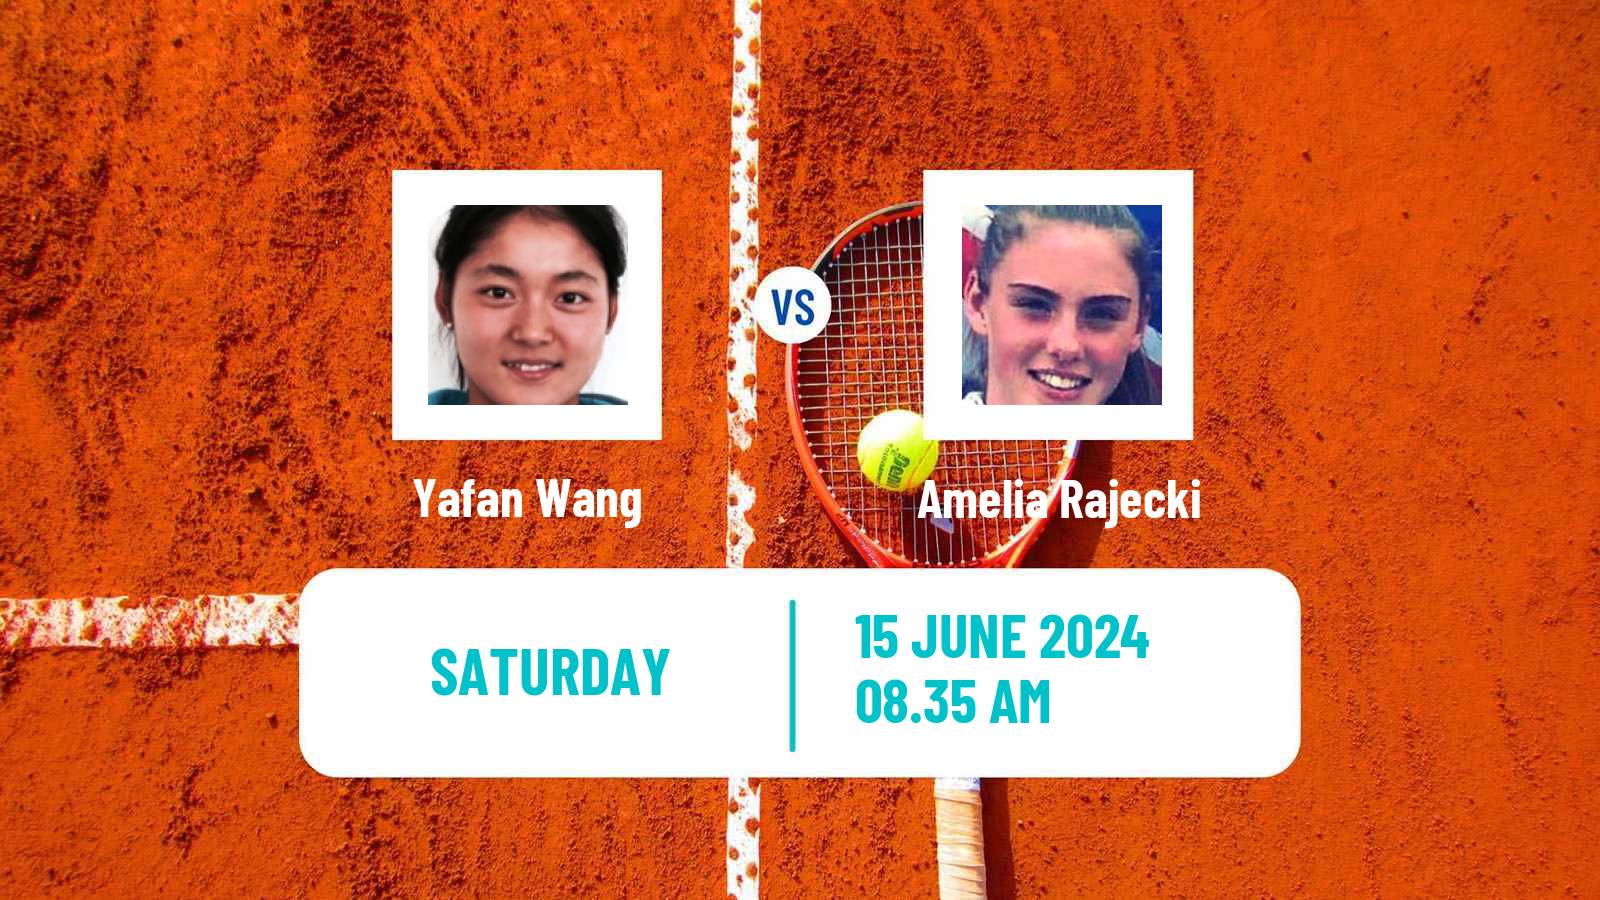 Tennis WTA Birmingham Yafan Wang - Amelia Rajecki